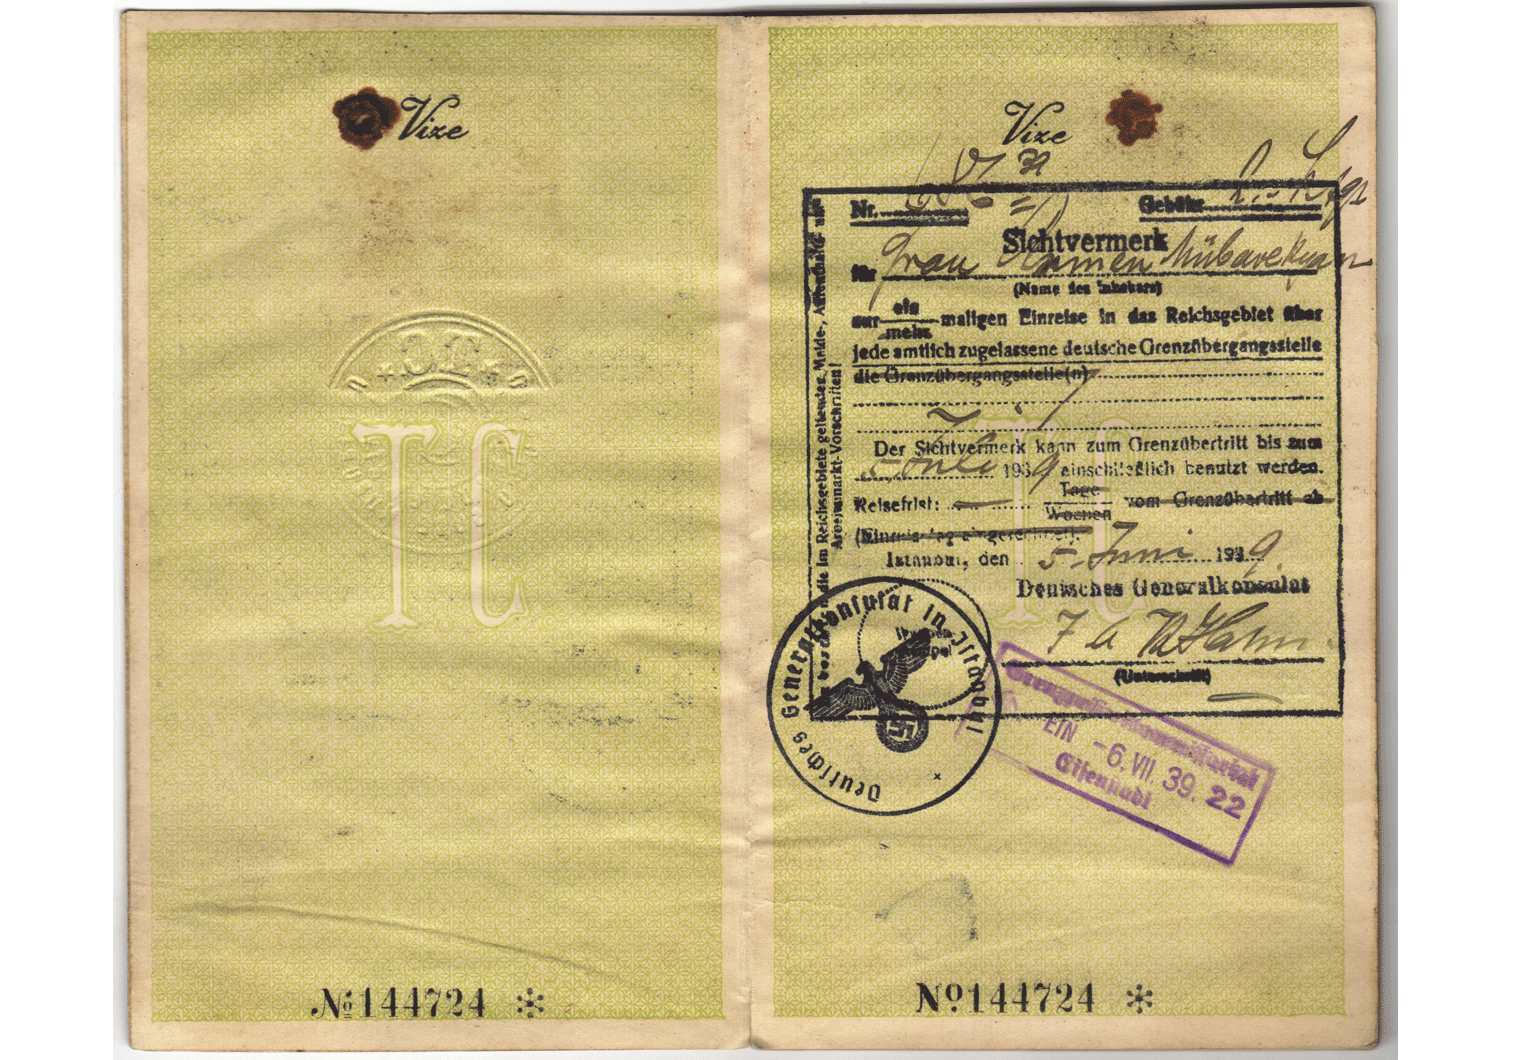 1939 German visa